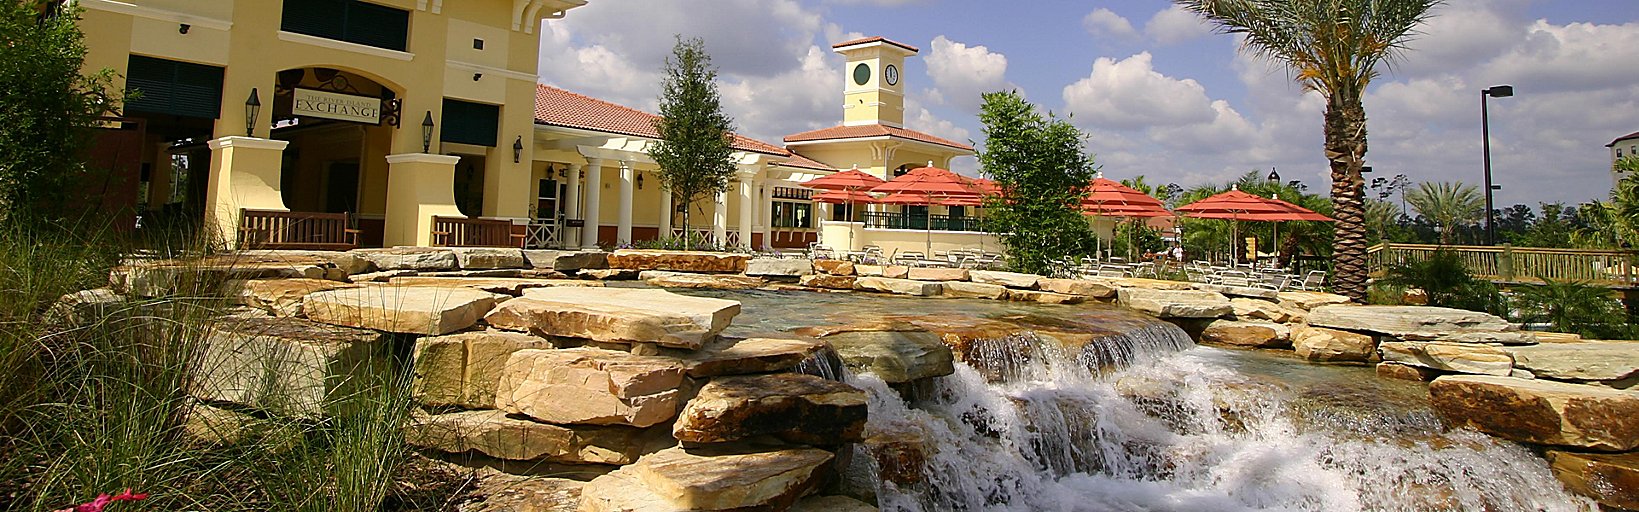 Orlando Hotels With Pools Near Kissimmee Fl Holiday Inn Club Vacation At Orange Lake Resort